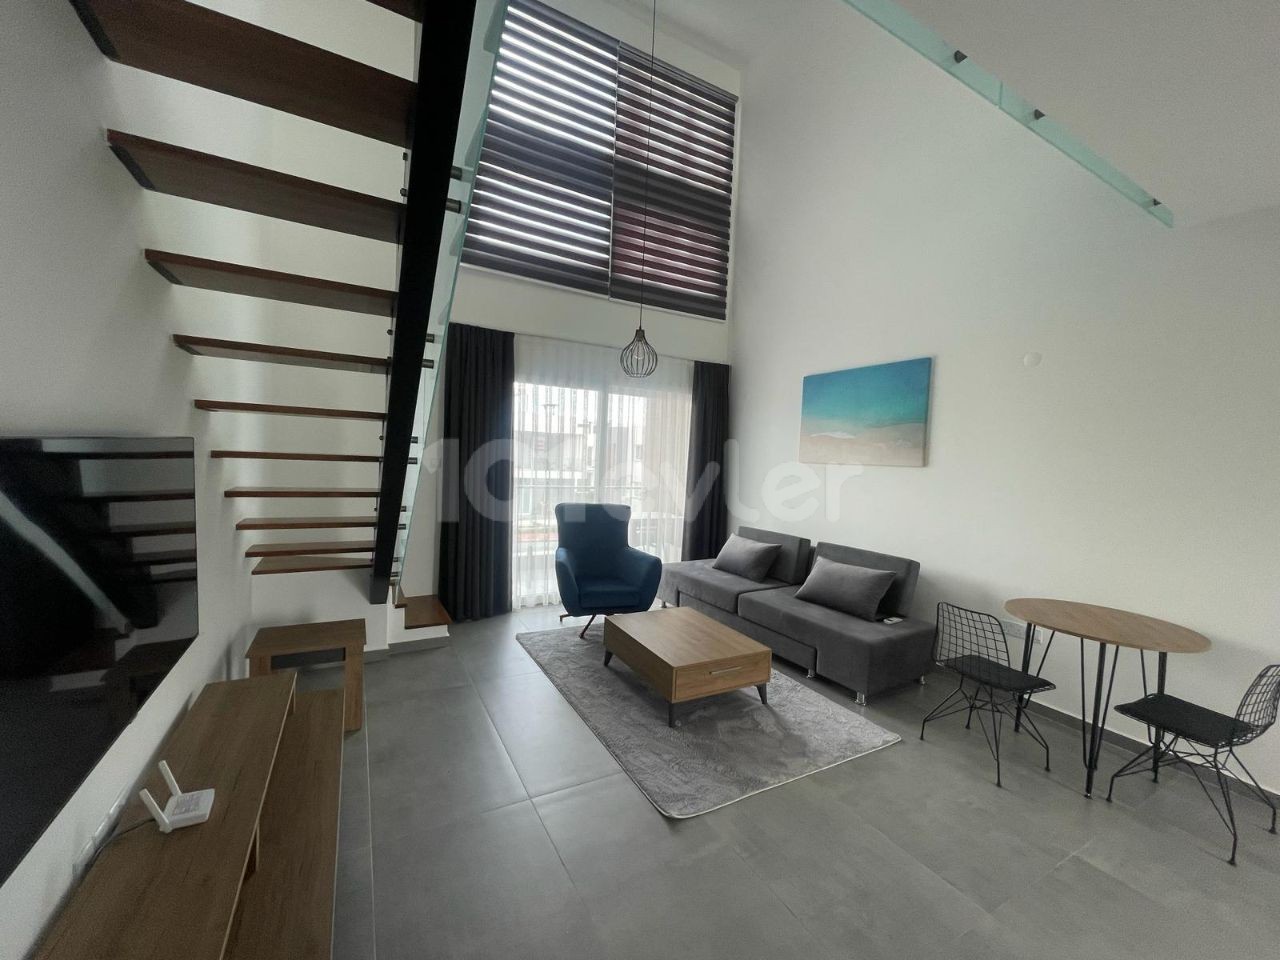 1+1 Loft Flat for Rent in İskele-Boğaz from Özkaraman Four Seasons